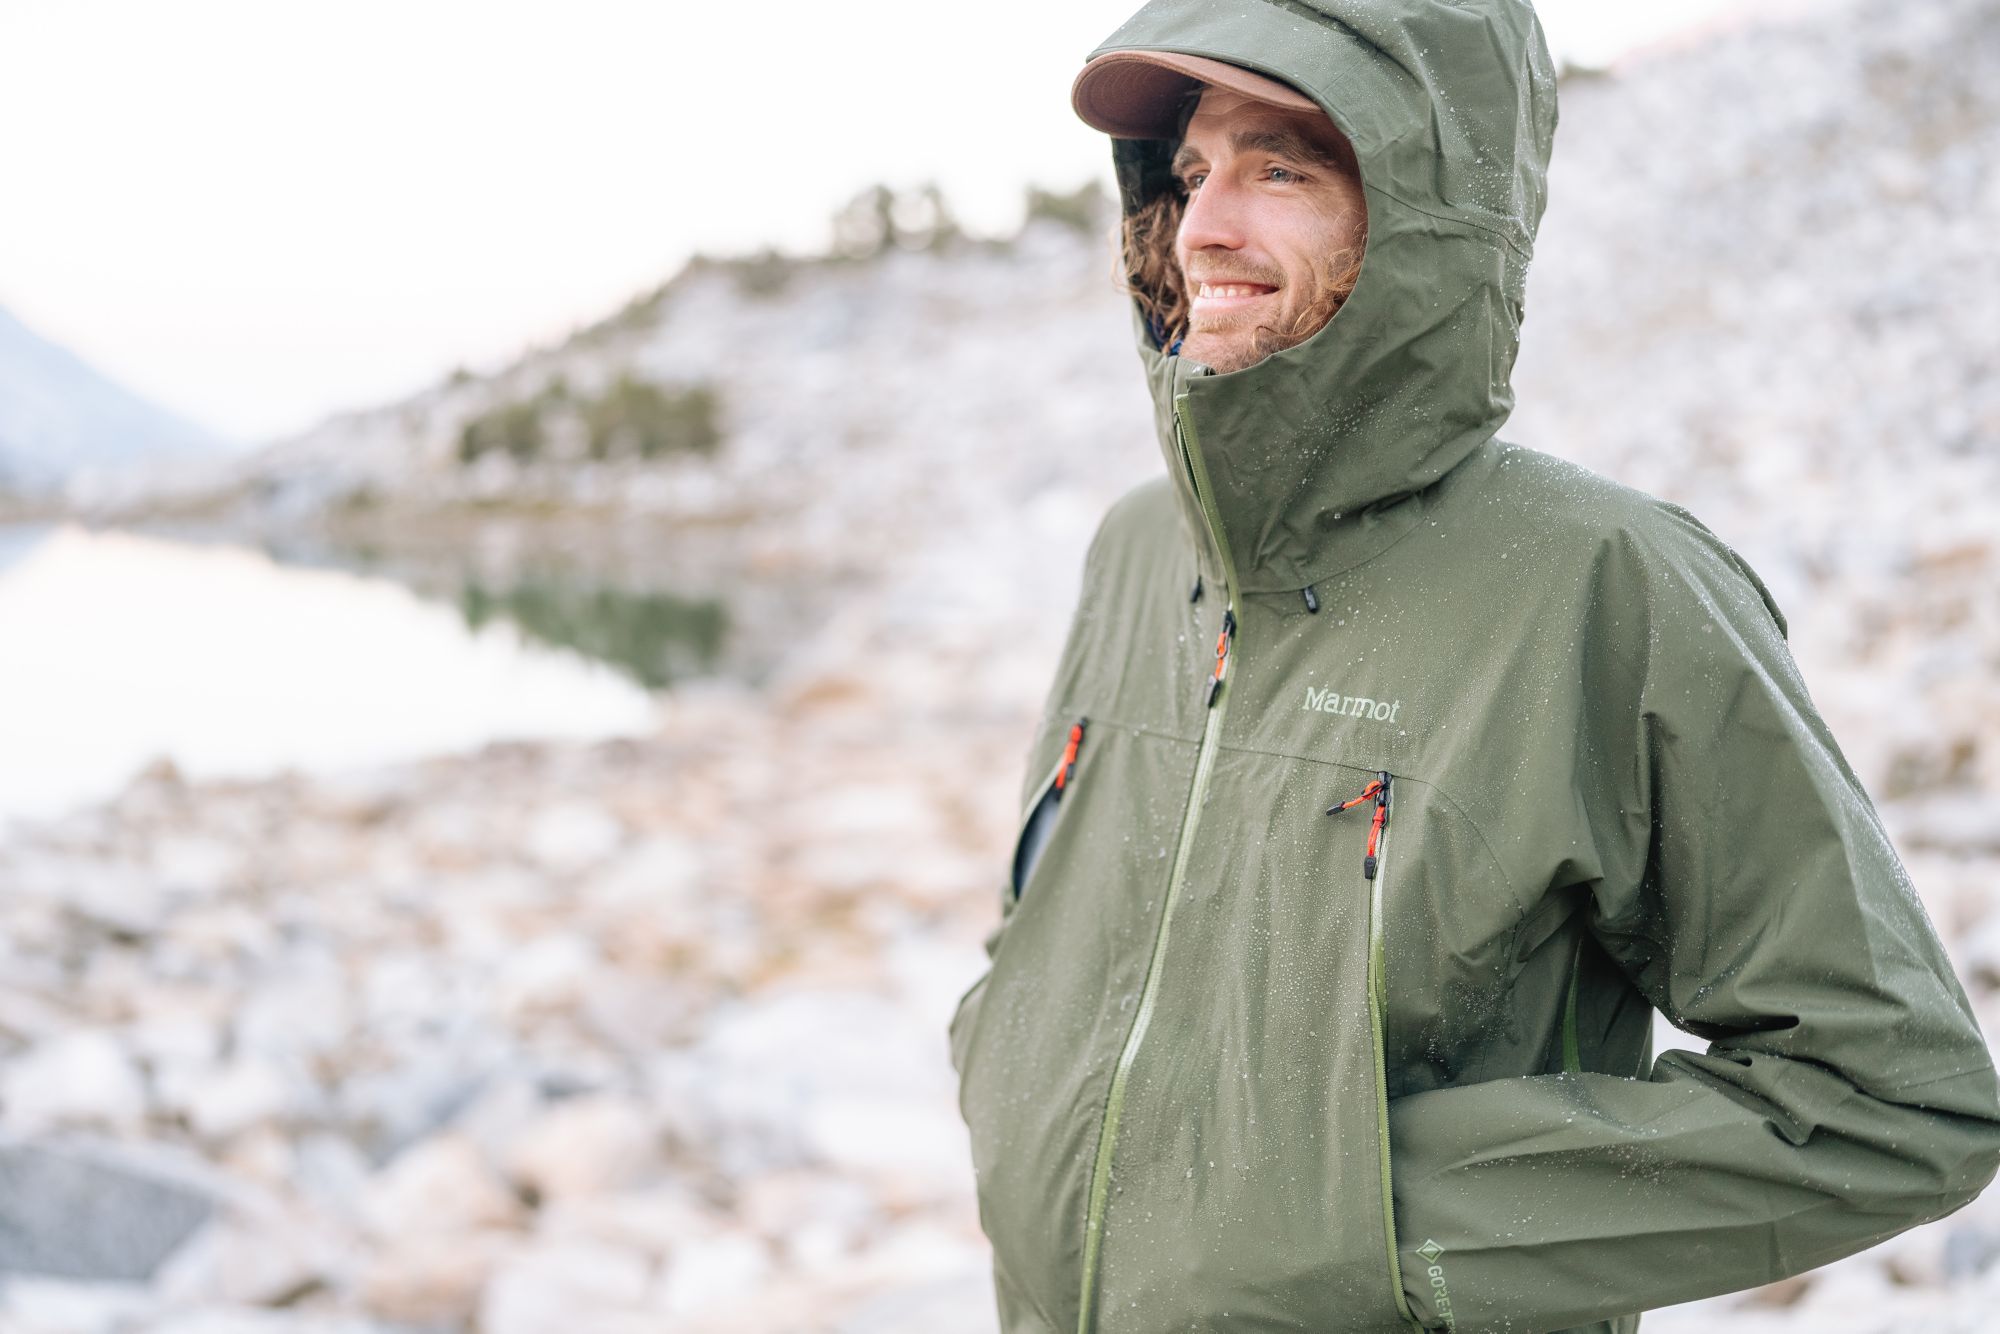 Men's Alpinist Jacket